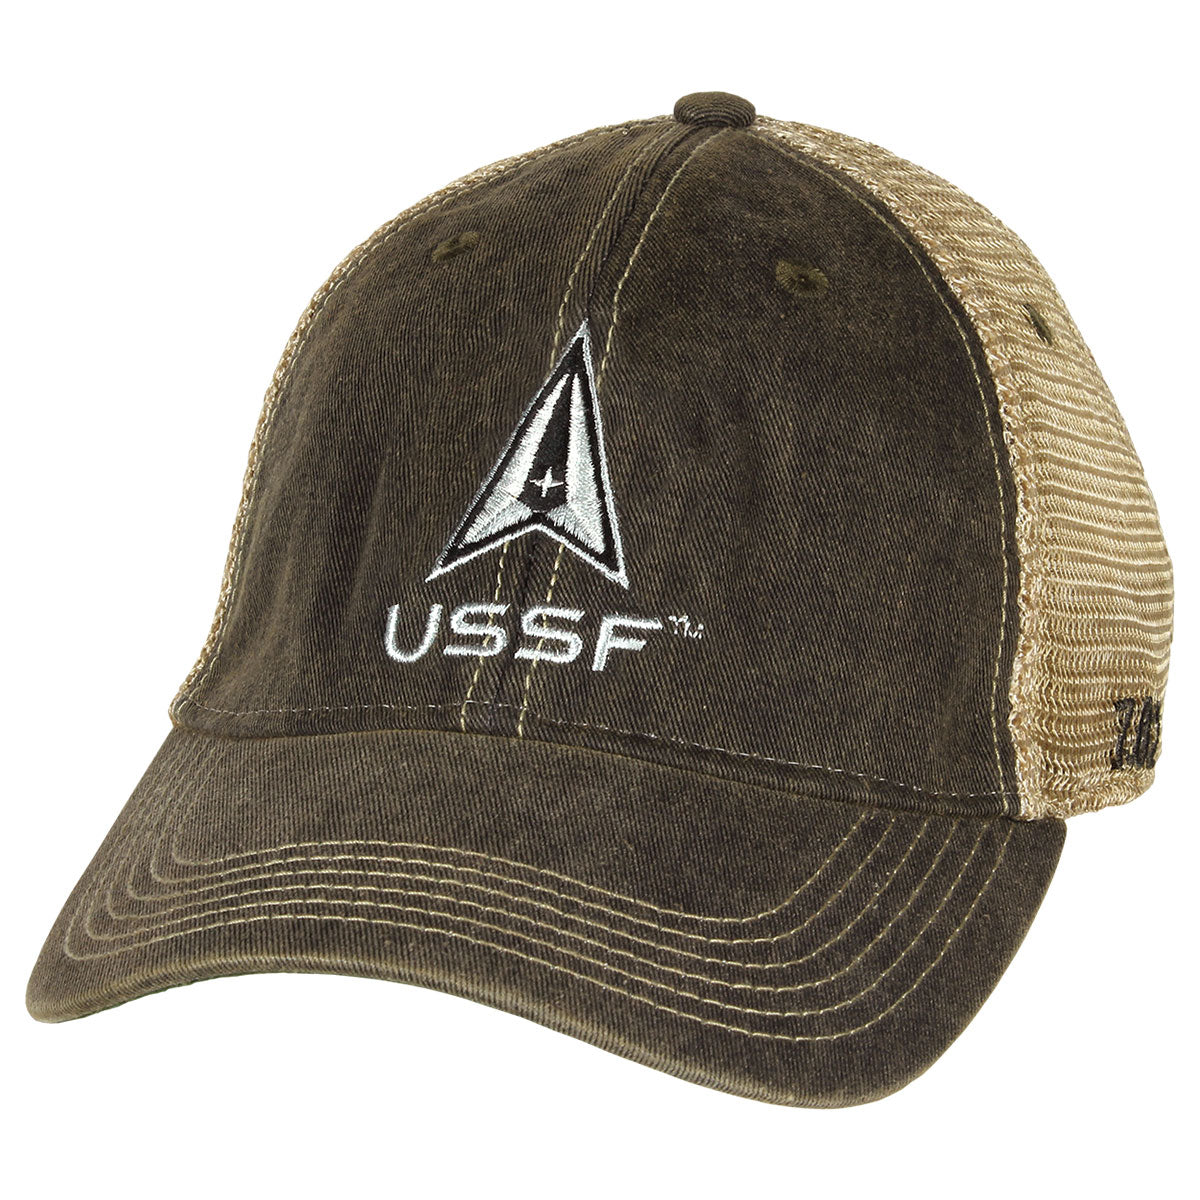 U.S. Space Force Caps